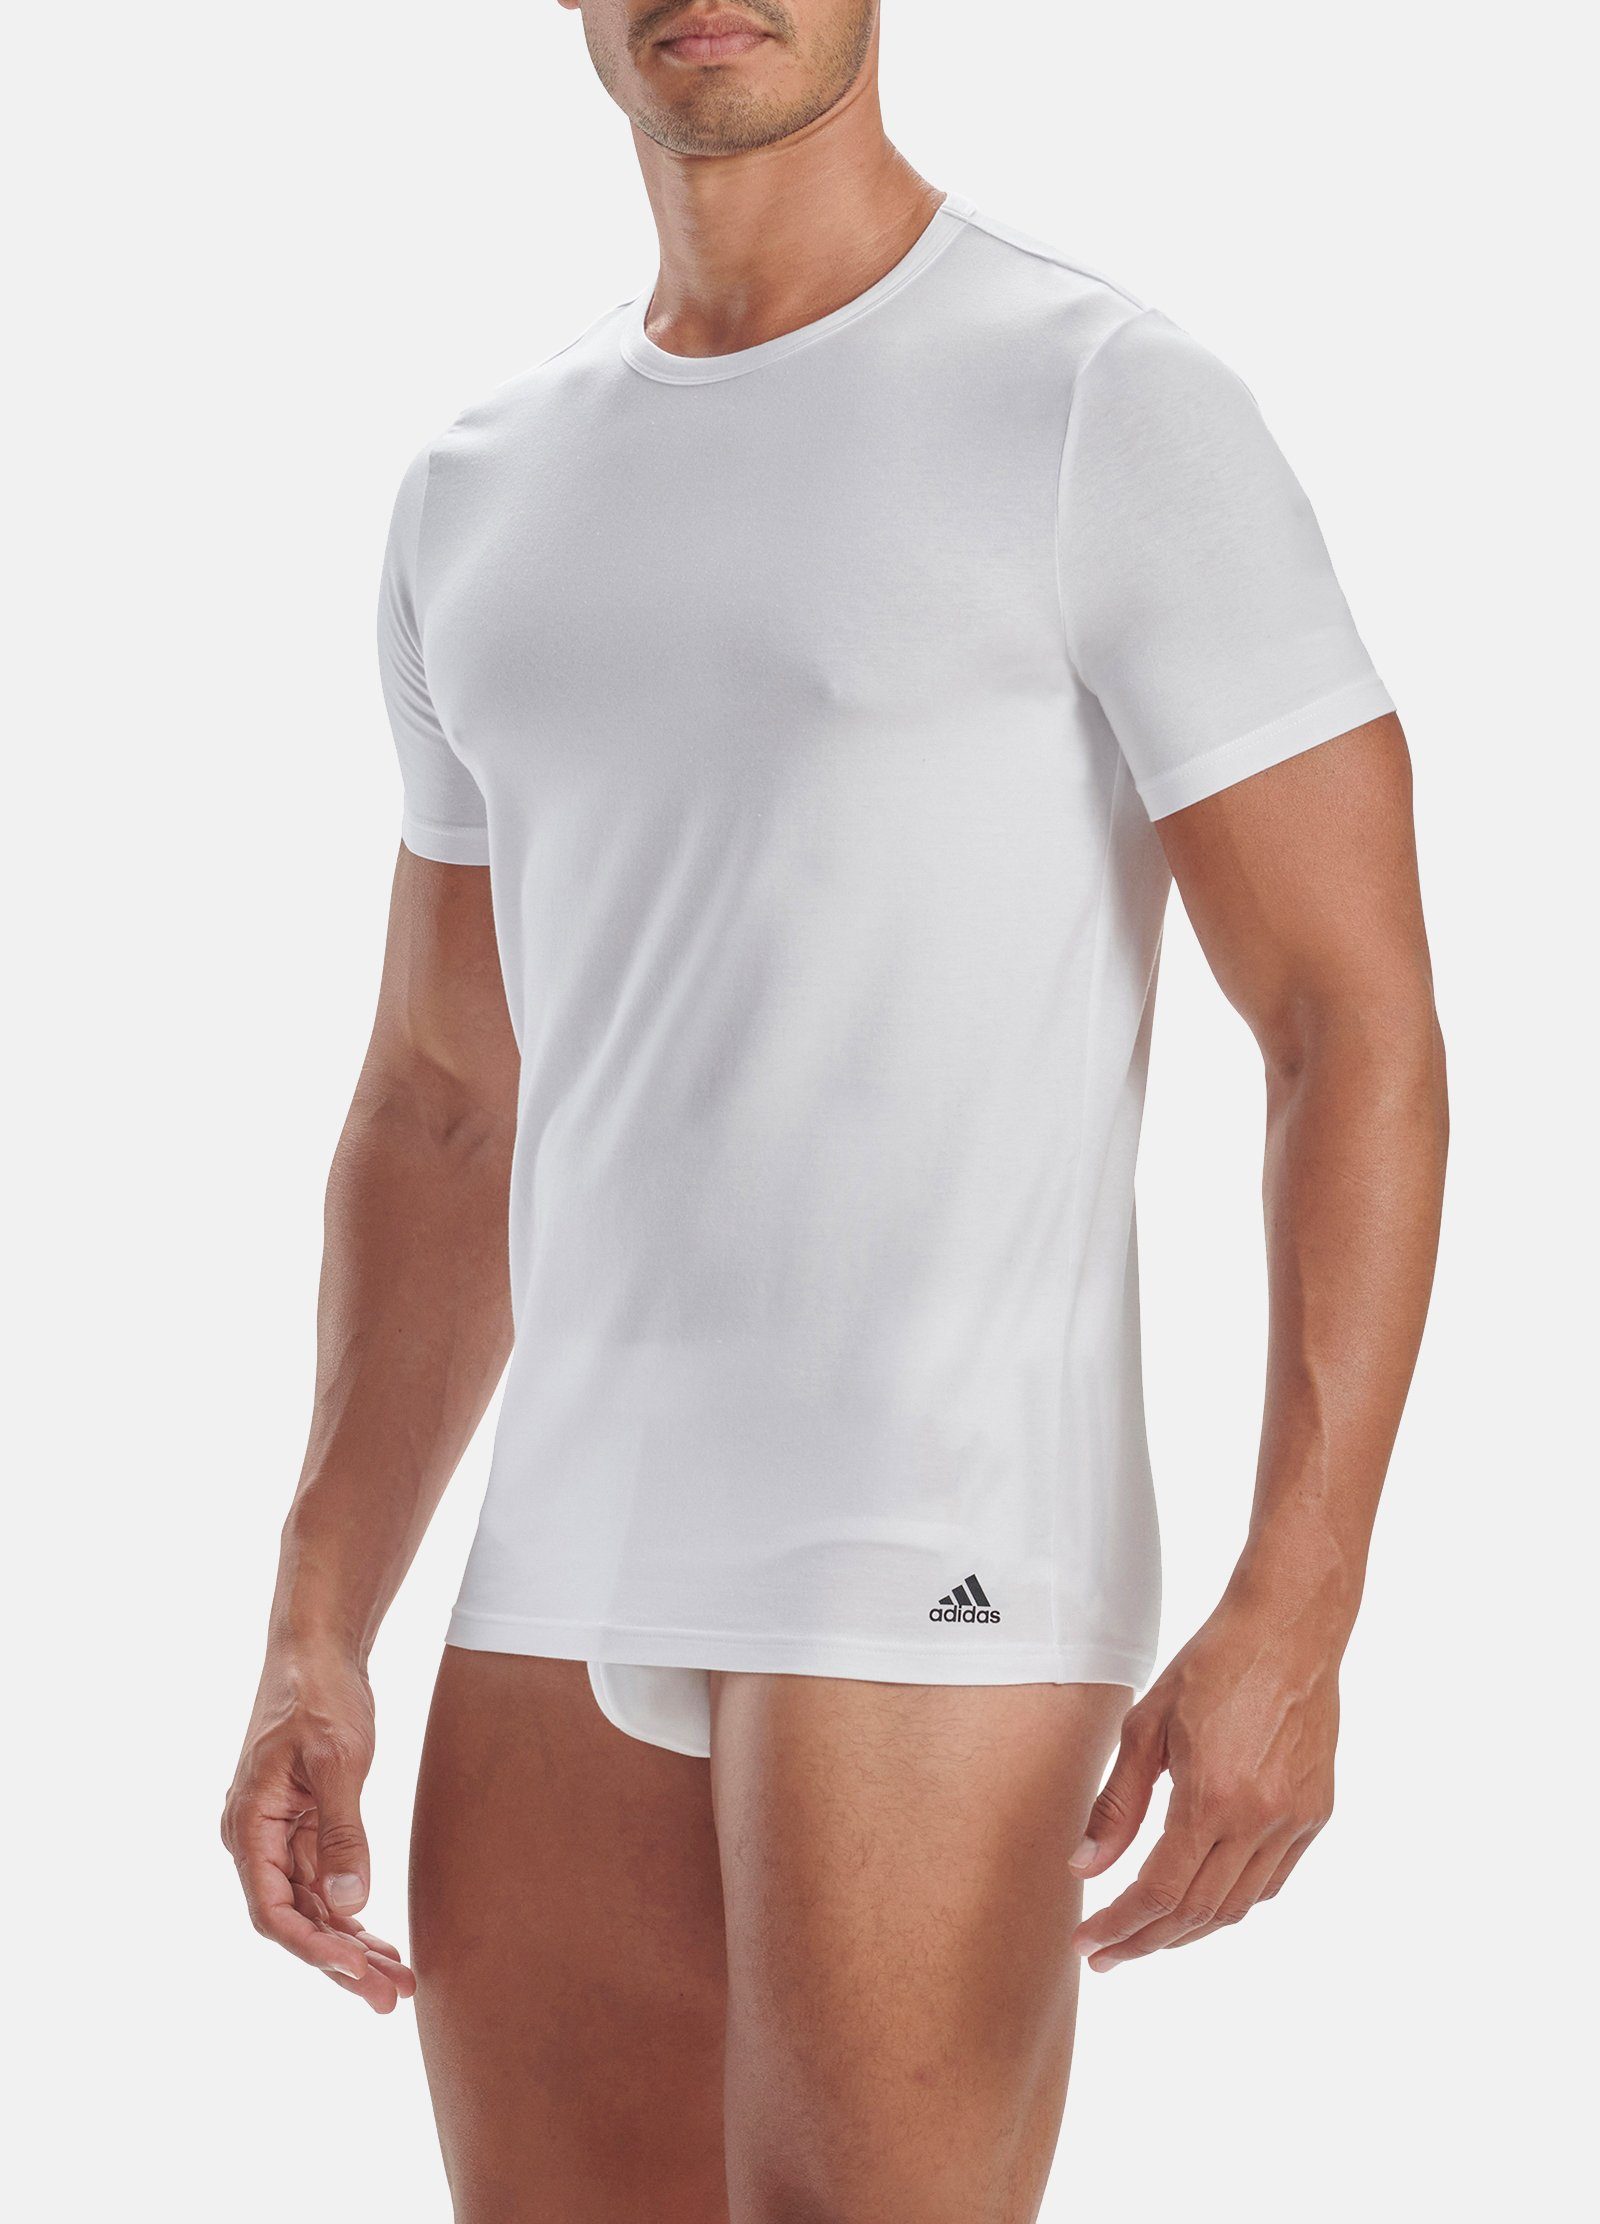 adidas T-Shirt Neck Performance White Poloshirt (6PK) Crew